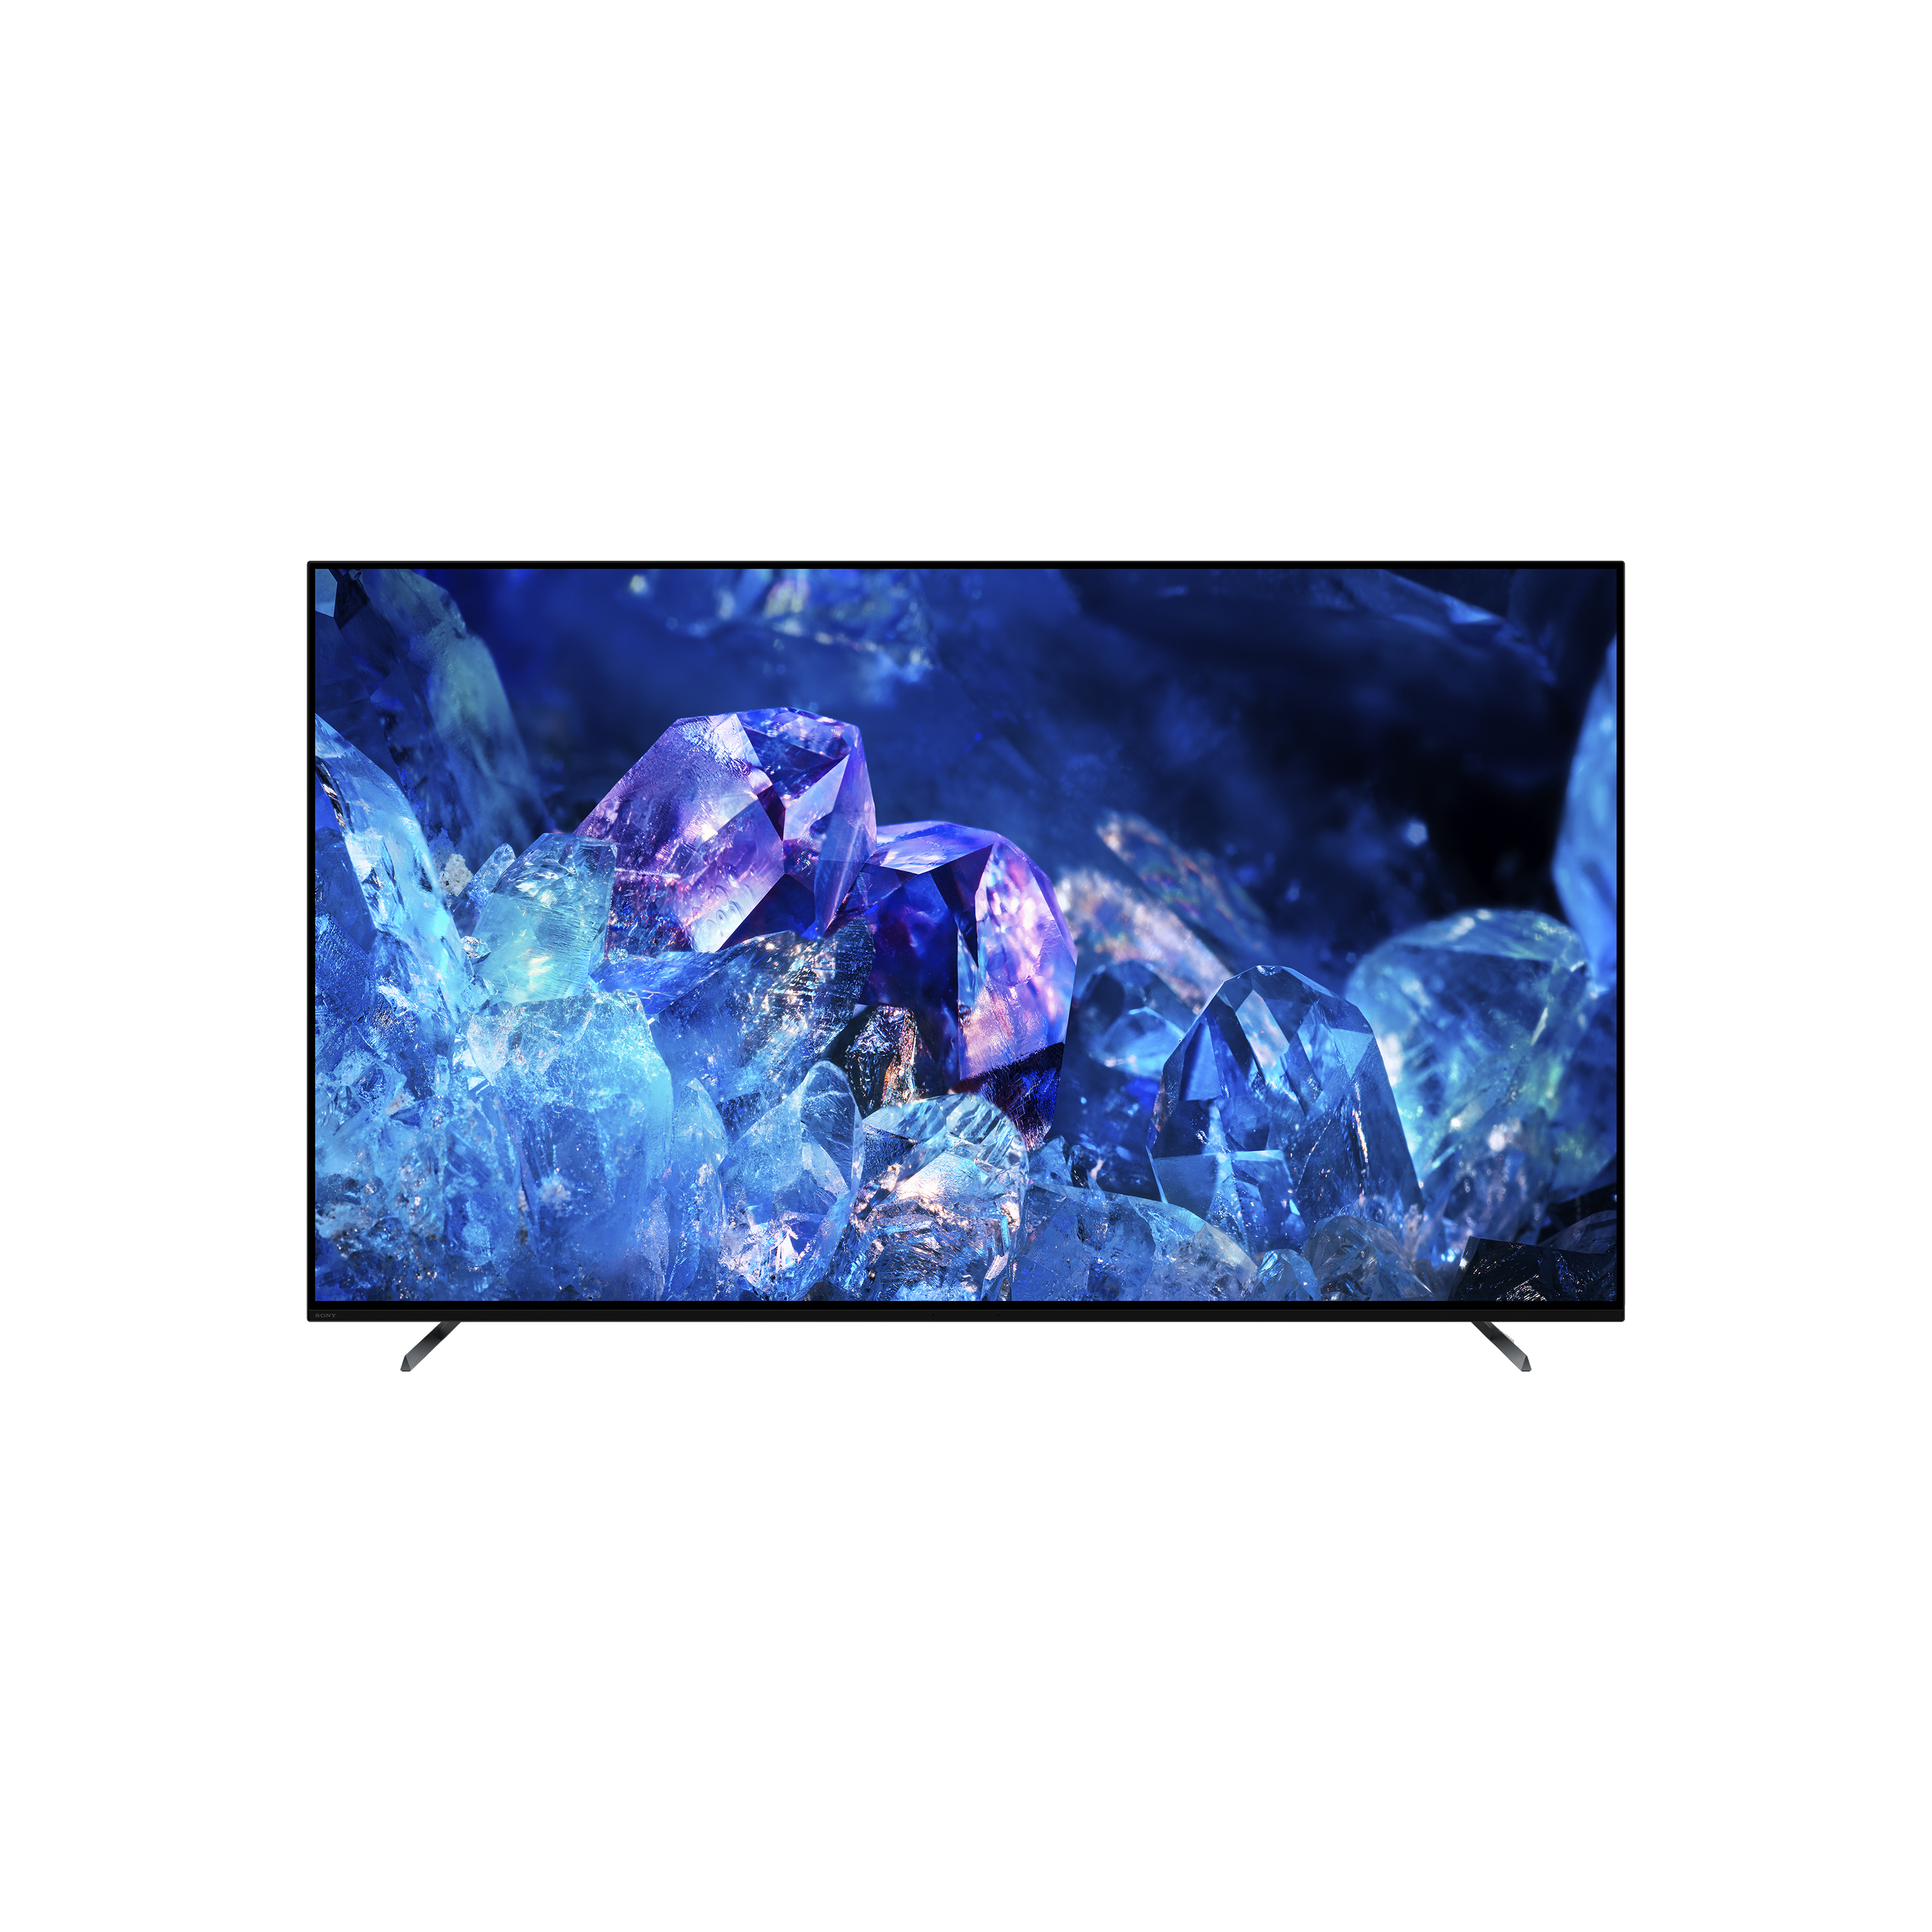 BRAVIA A80K 螢幕顯示藍色與紫色水晶影像的正面照